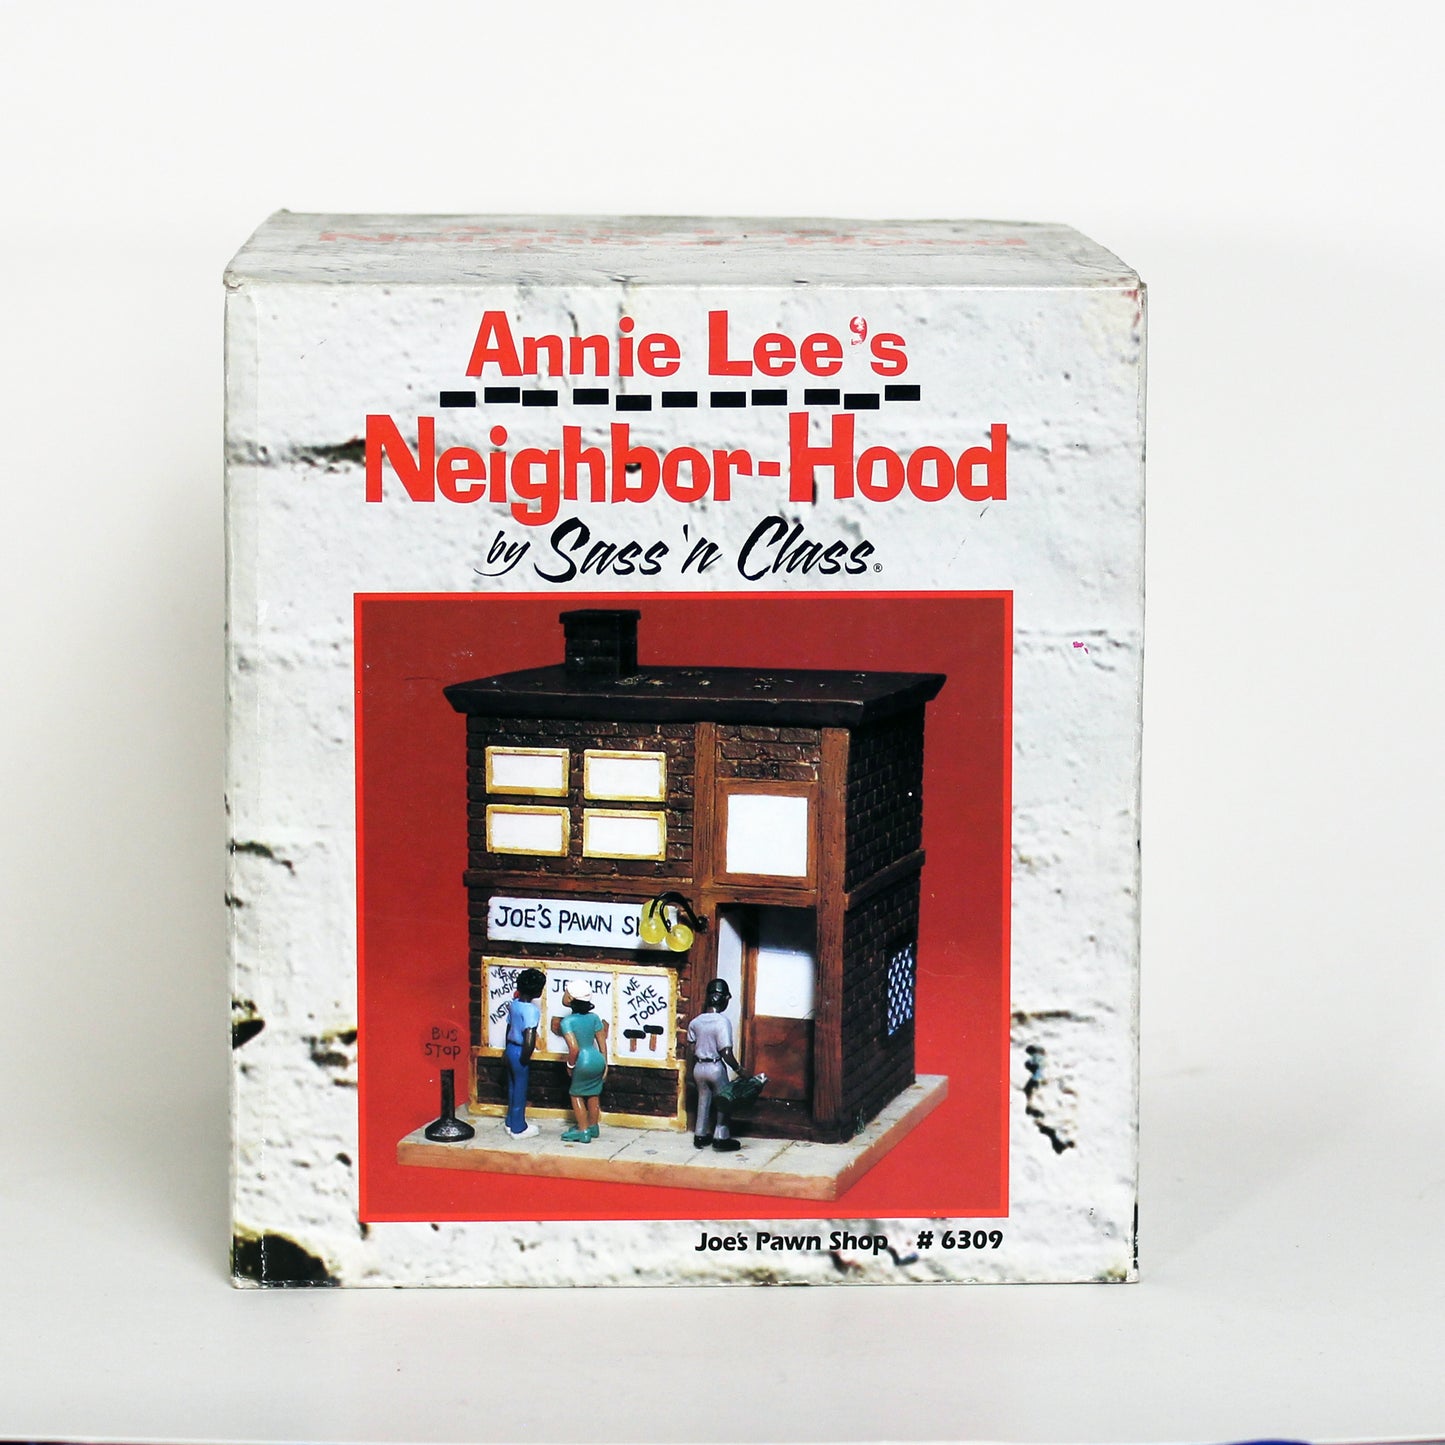 Joe's Pawn Shop #6309 Annie Lee's Neighbor-Hood box